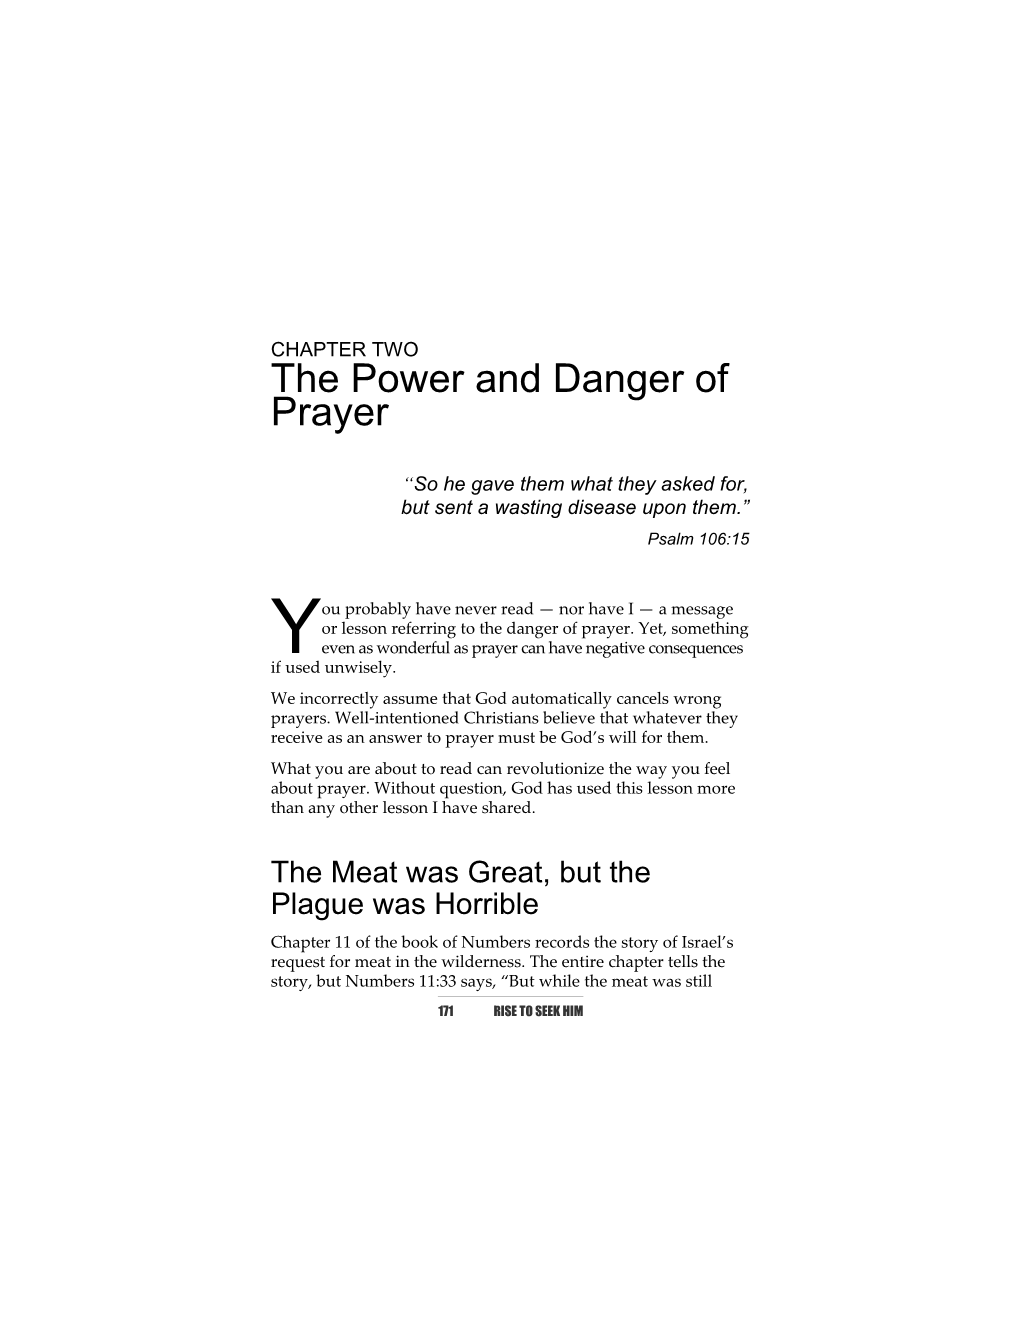 The Power and Danger of Prayer